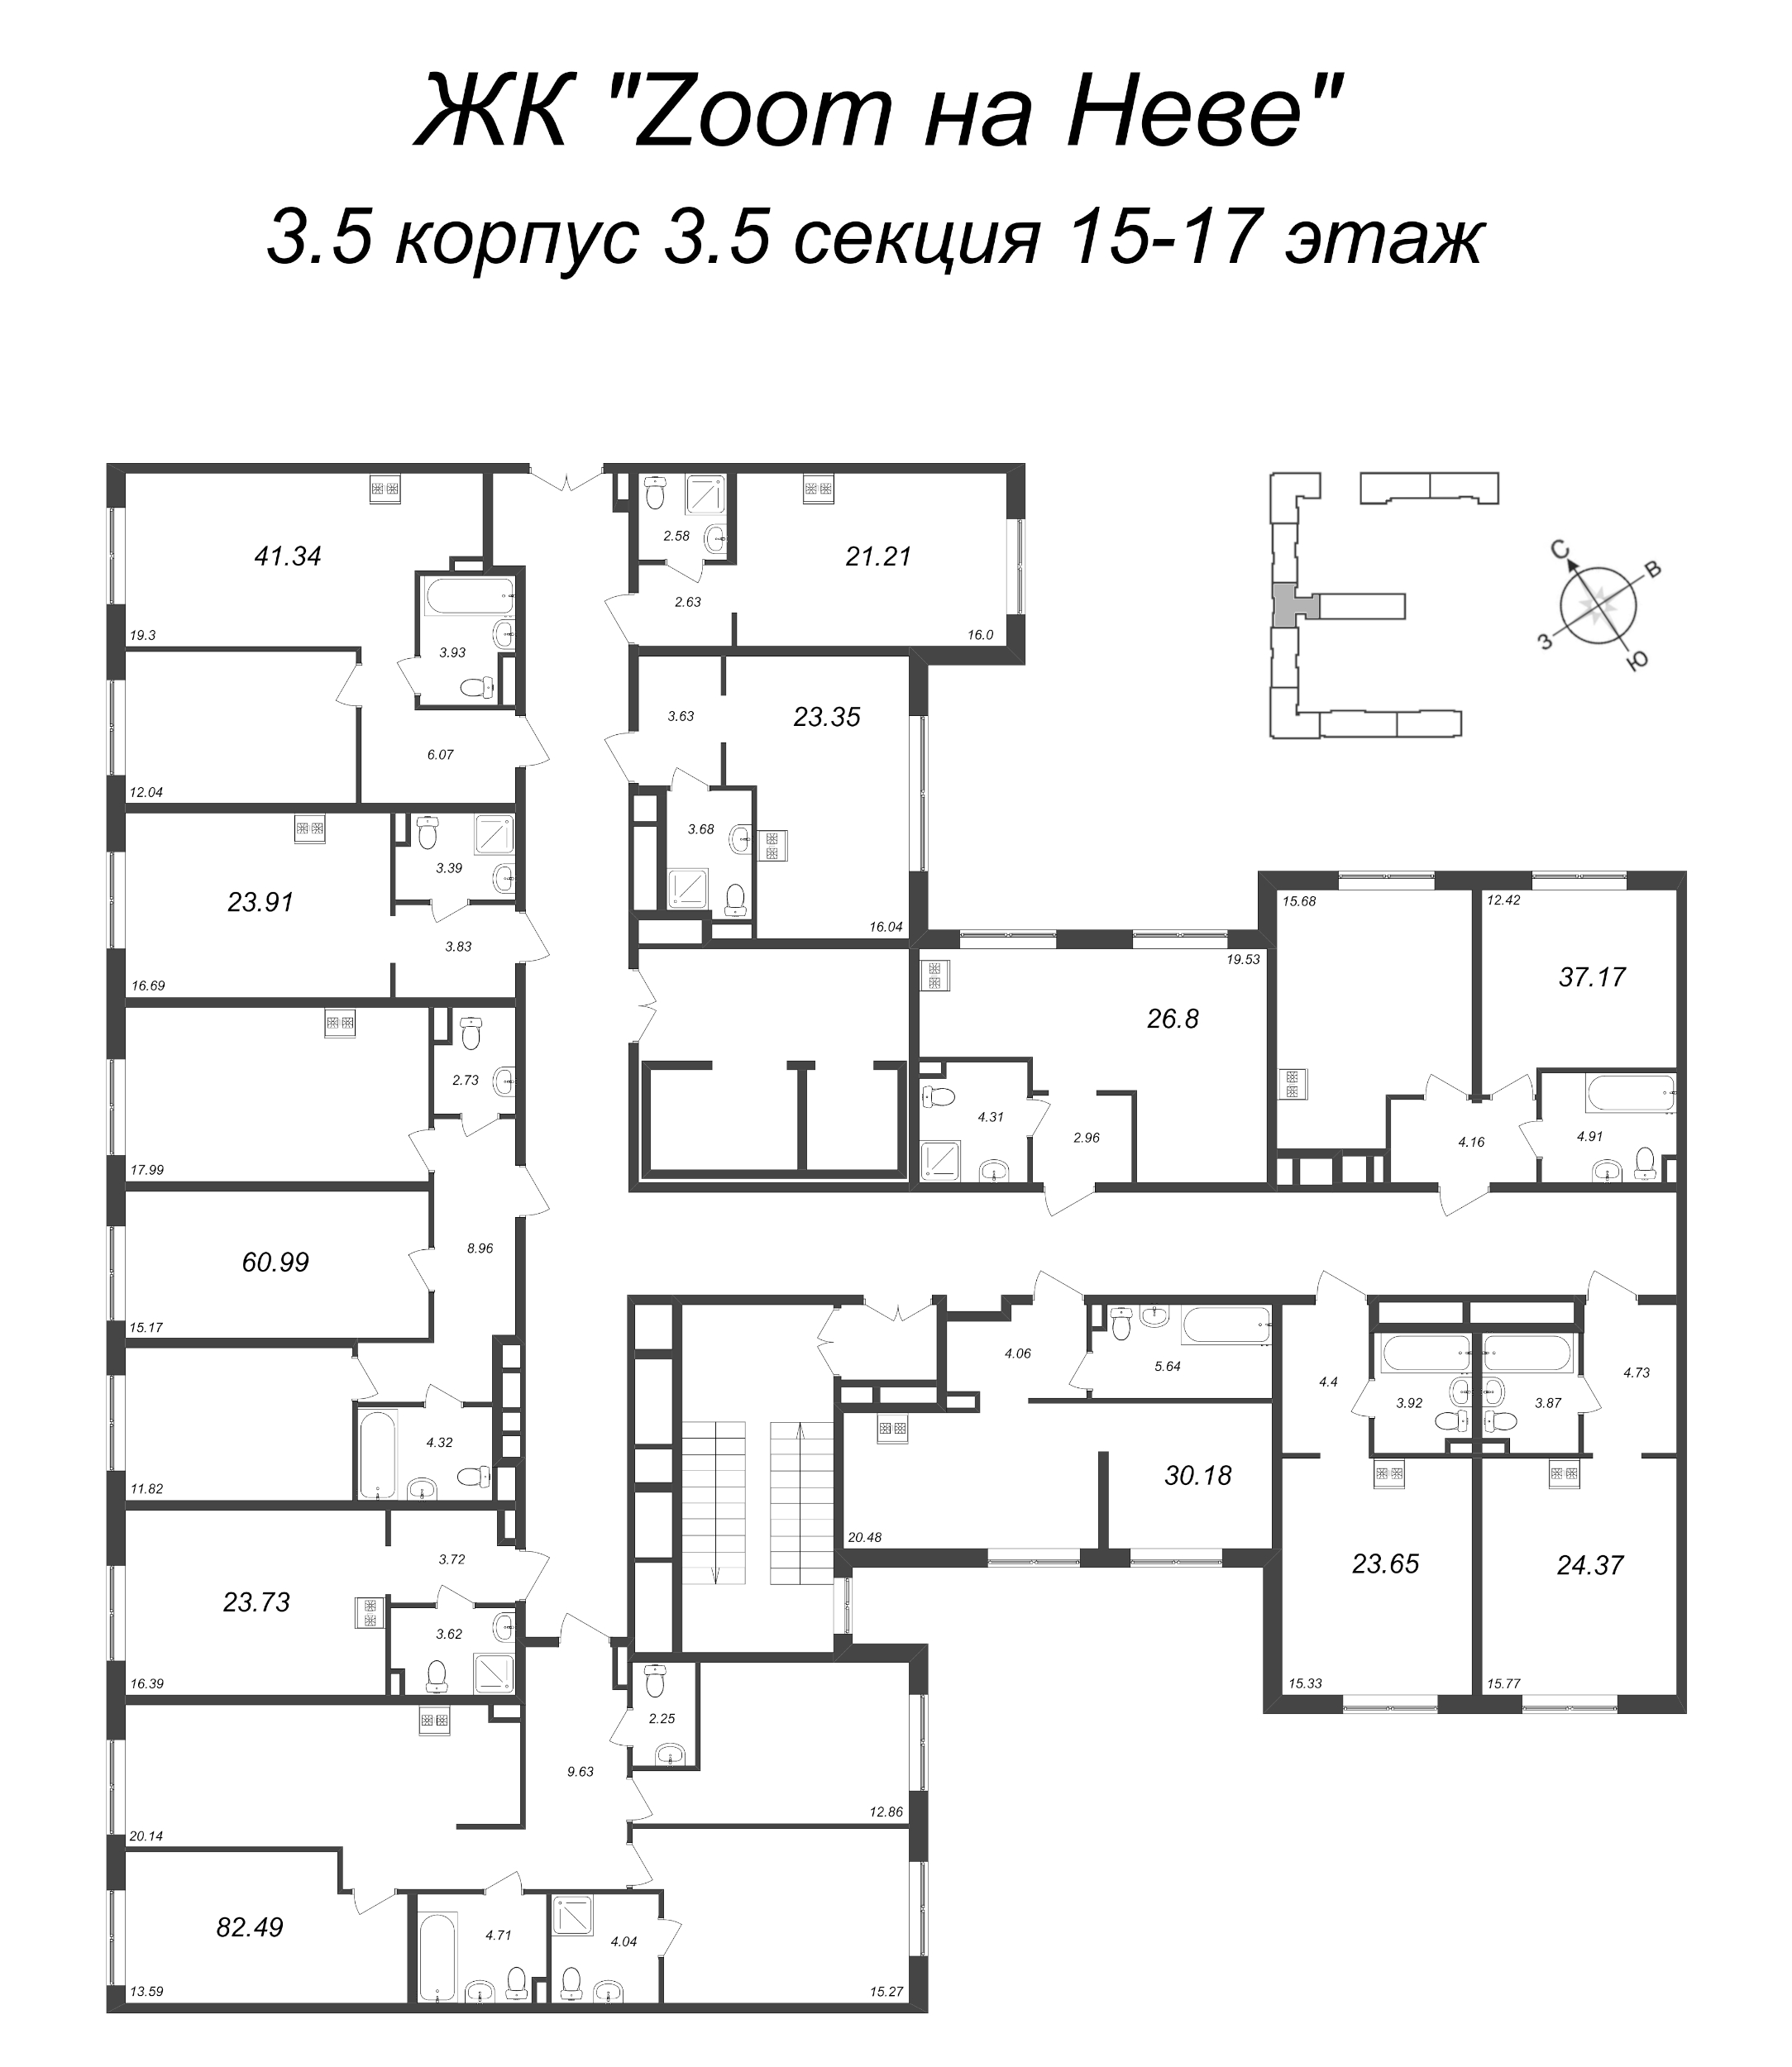 4-комнатная (Евро) квартира, 82.11 м² в ЖК "Zoom на Неве" - планировка этажа